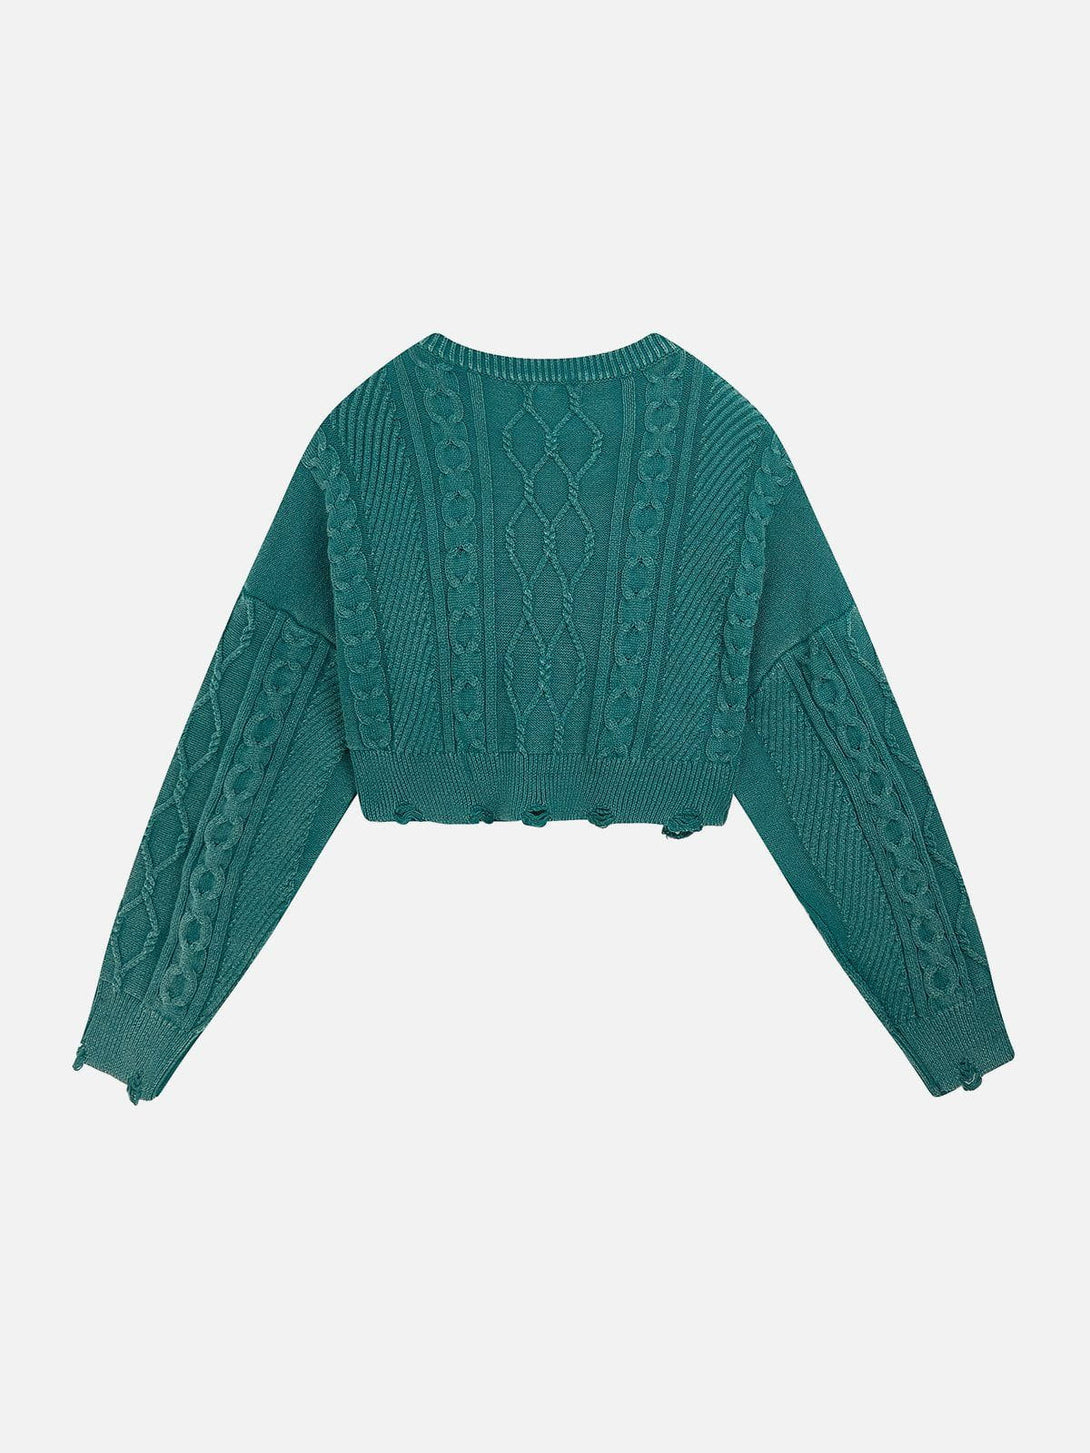 Majesda® - Vintage Washed Jacquard Raw Edge Sweater outfit ideas streetwear fashion